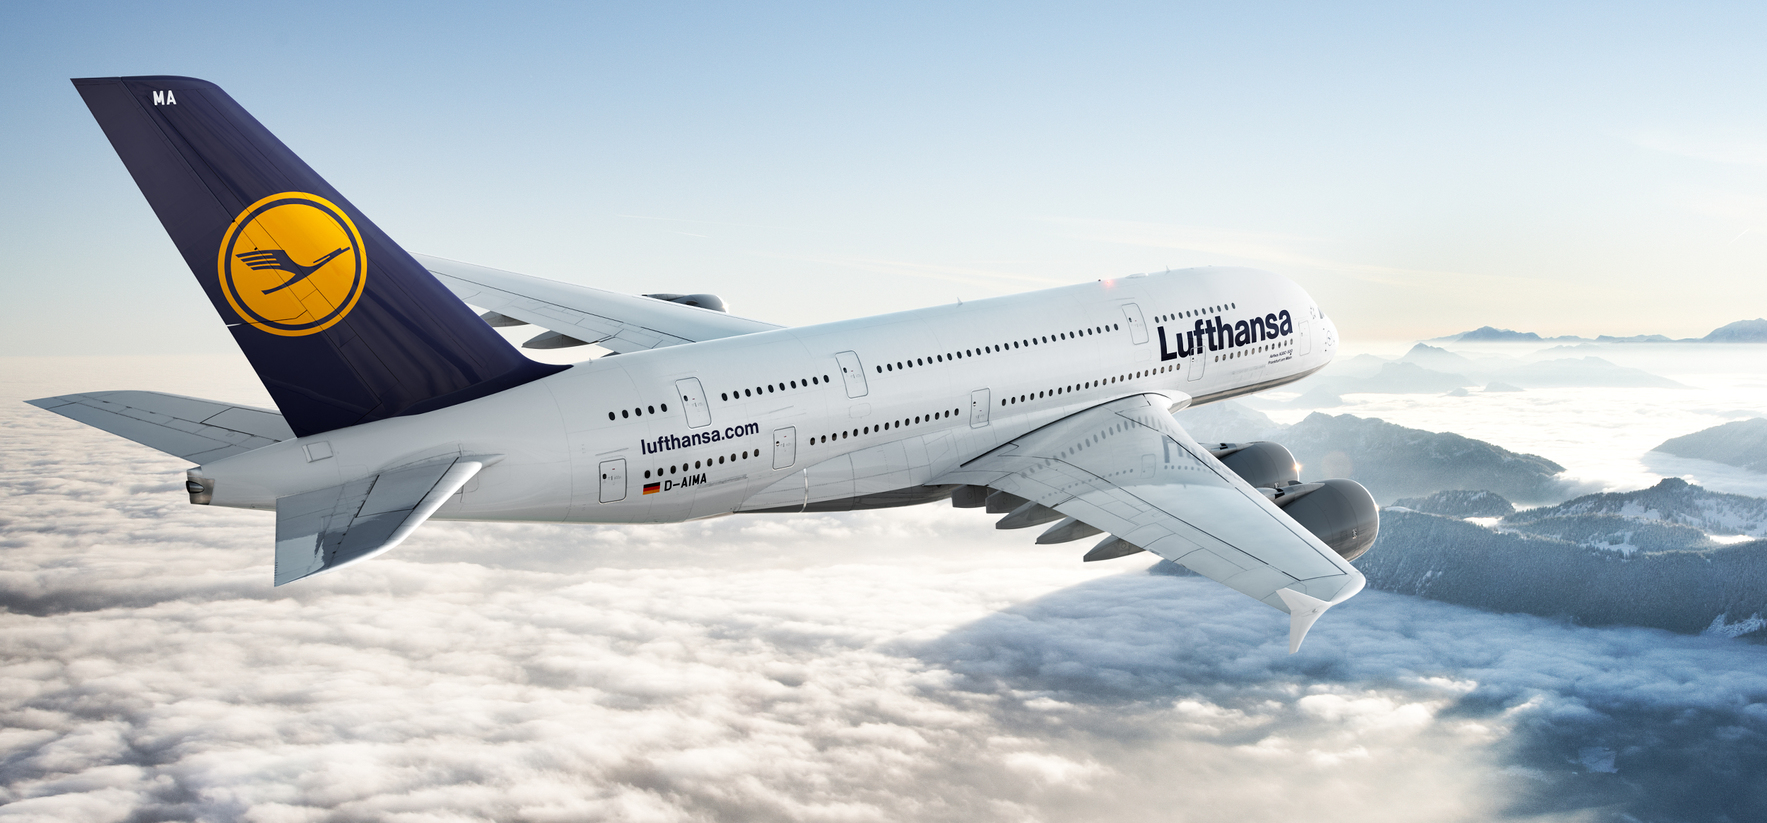 Lufthansa и блокчейн